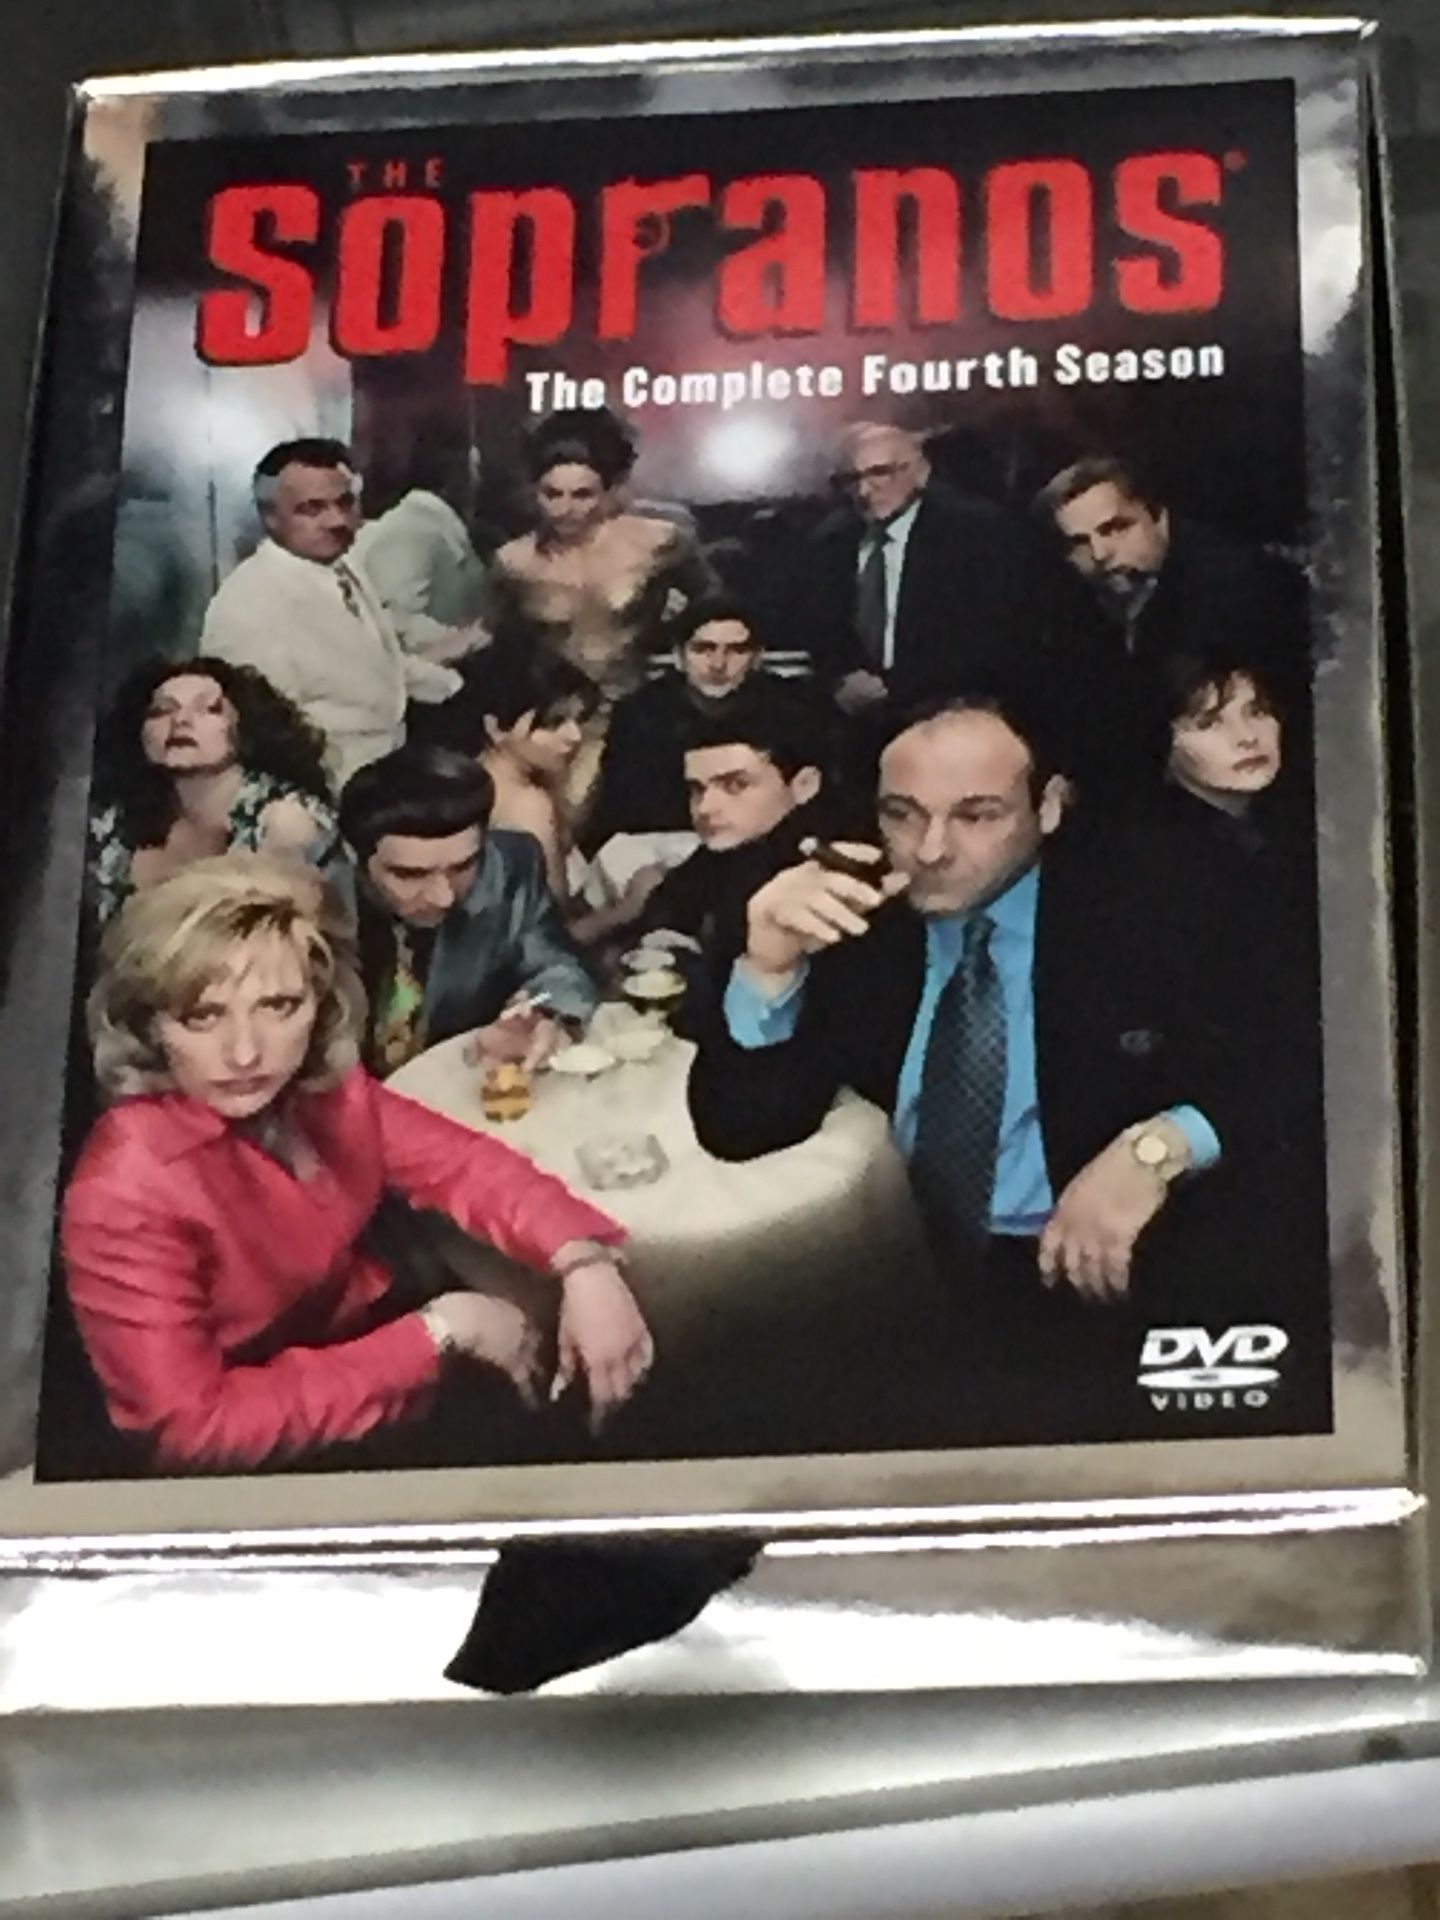 Sopranos 4 season dvd